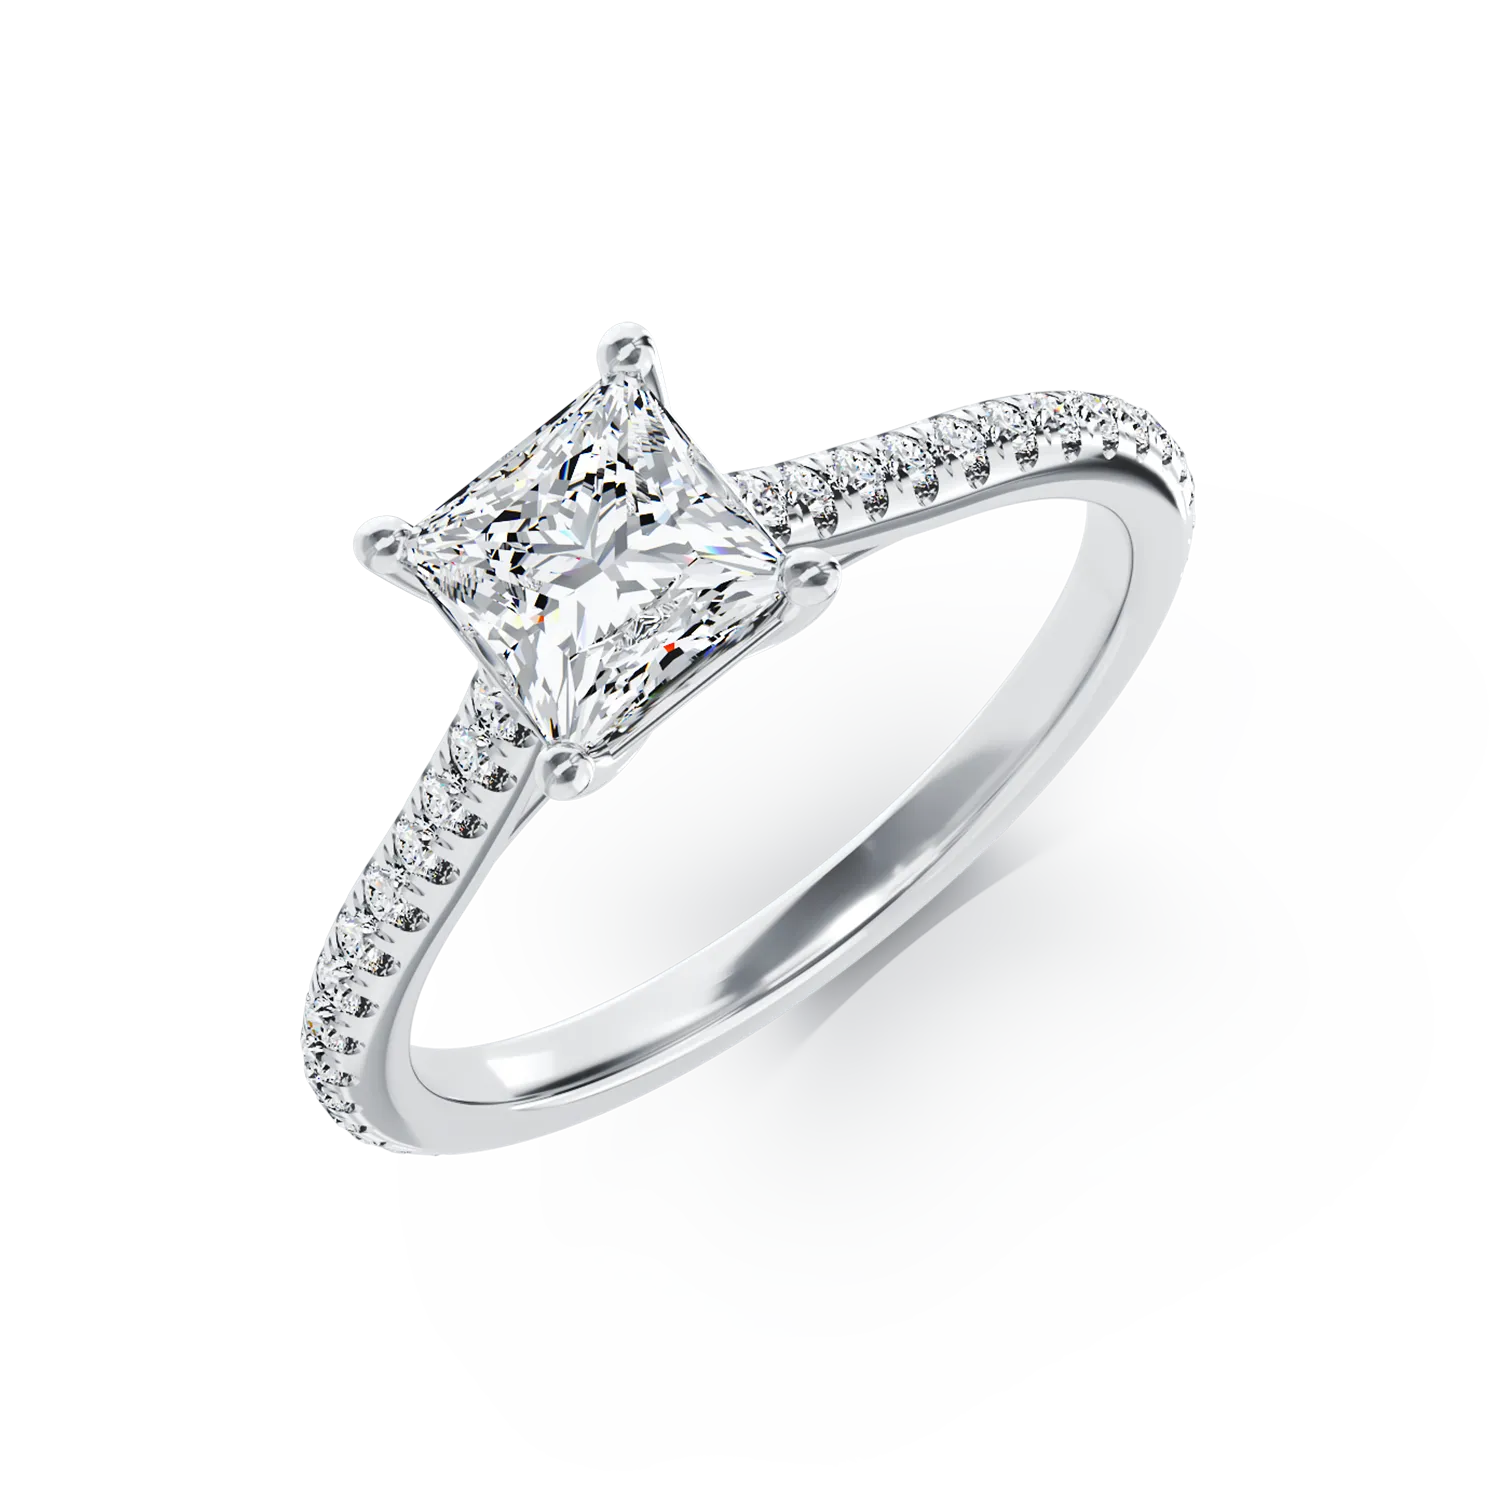 Diamond platinum engagement ring with 1.01ct diamond and 0.26ct diamonds